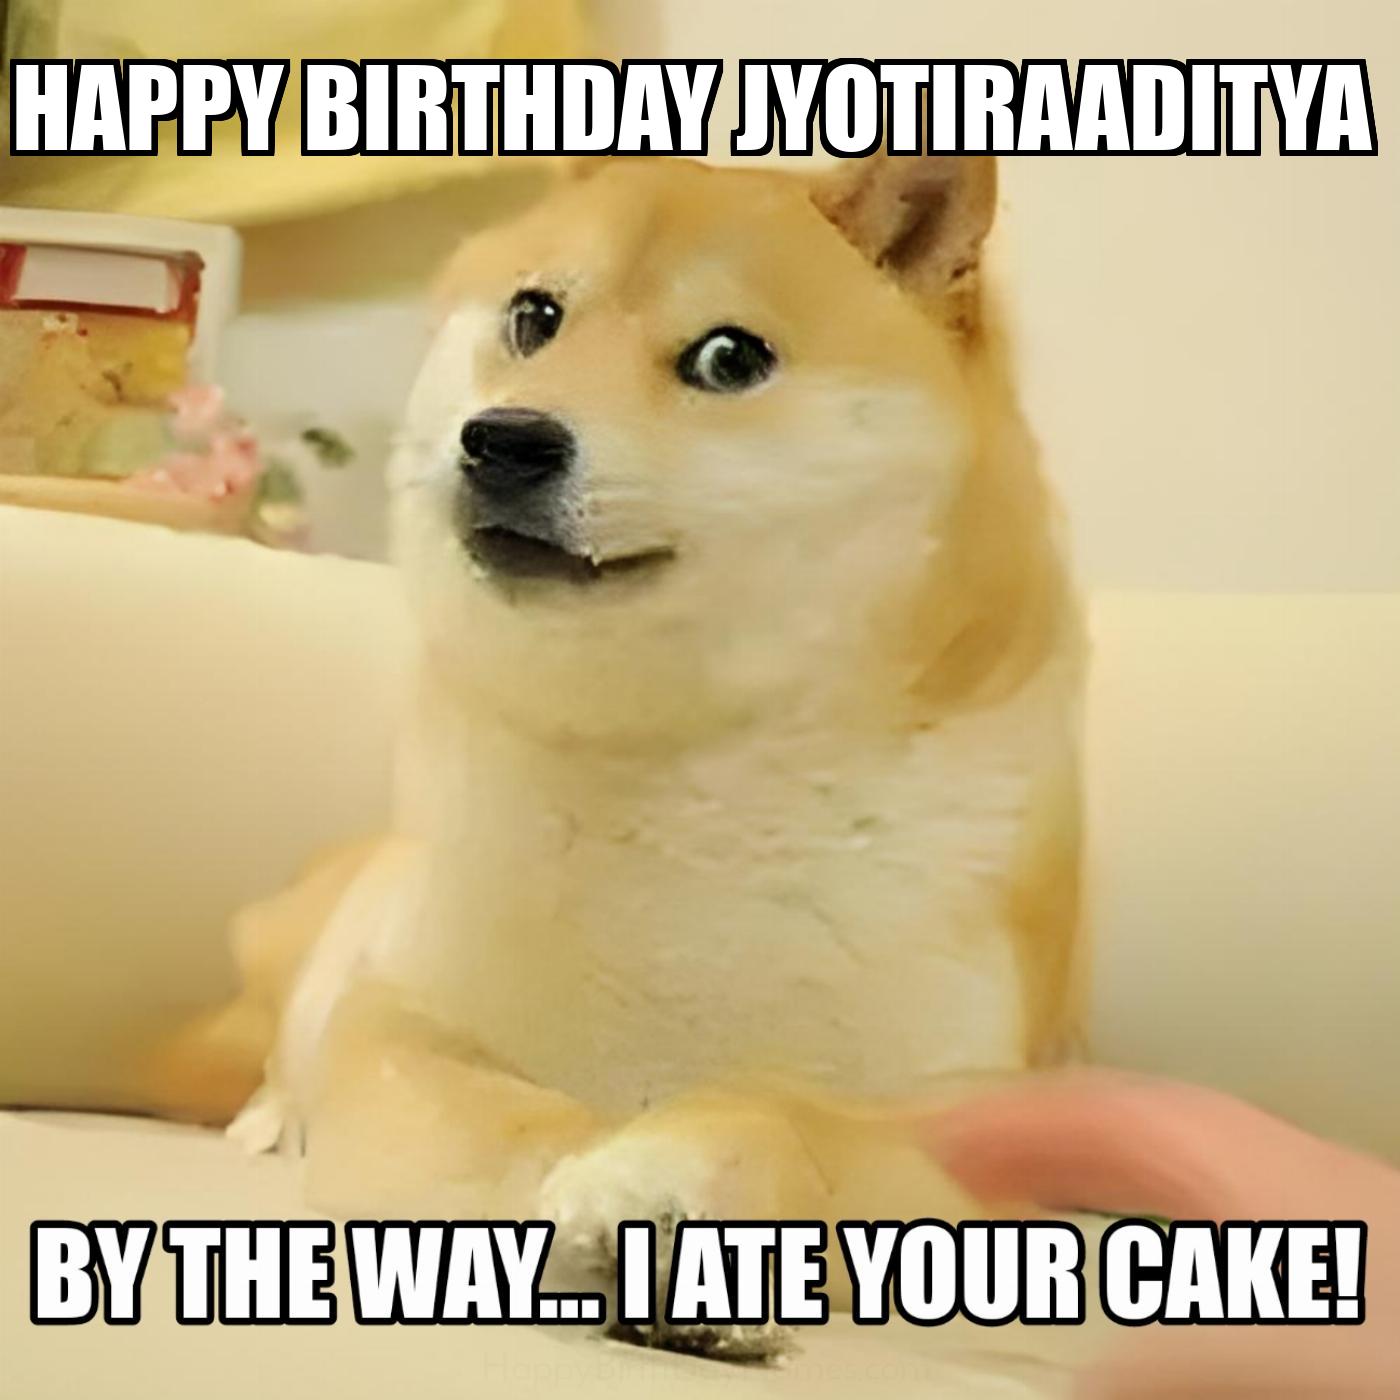 Happy Birthday Jyotiraaditya BTW I Ate Your Cake Meme